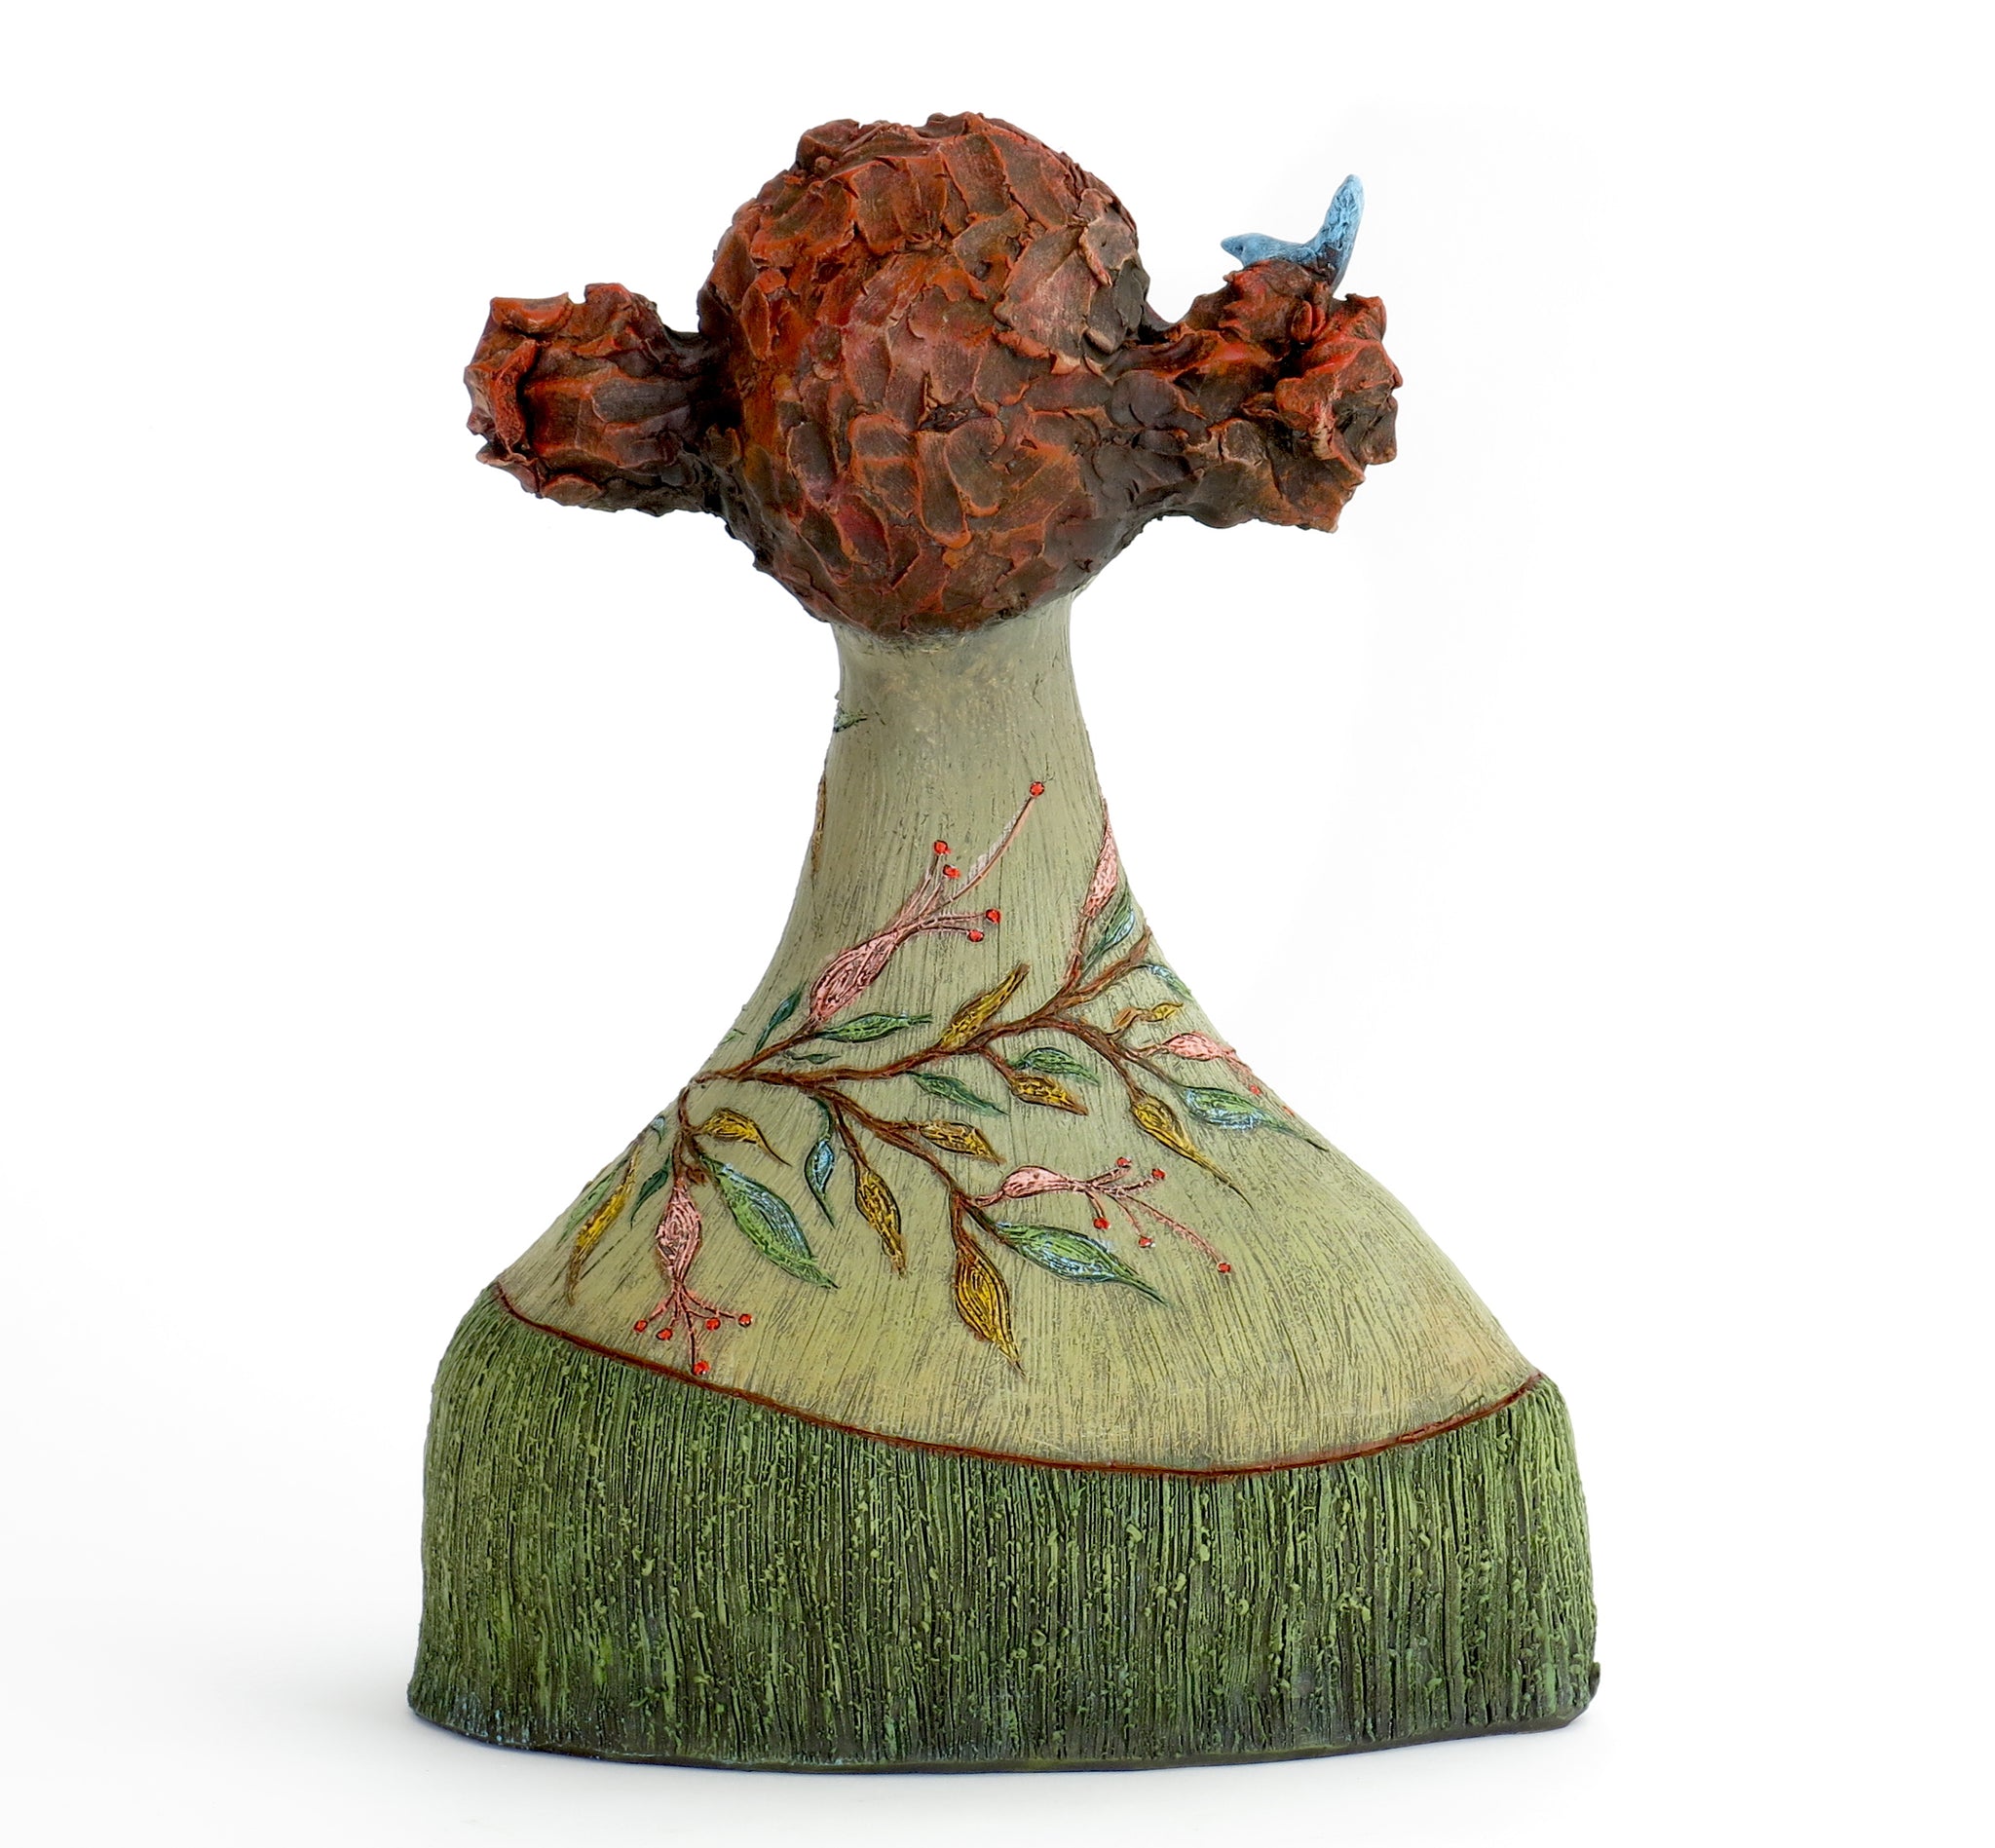 SOLD   "Hearing the Voice that Calls Me Home" Original ceramic sculpture by Jacquline Hurlbert